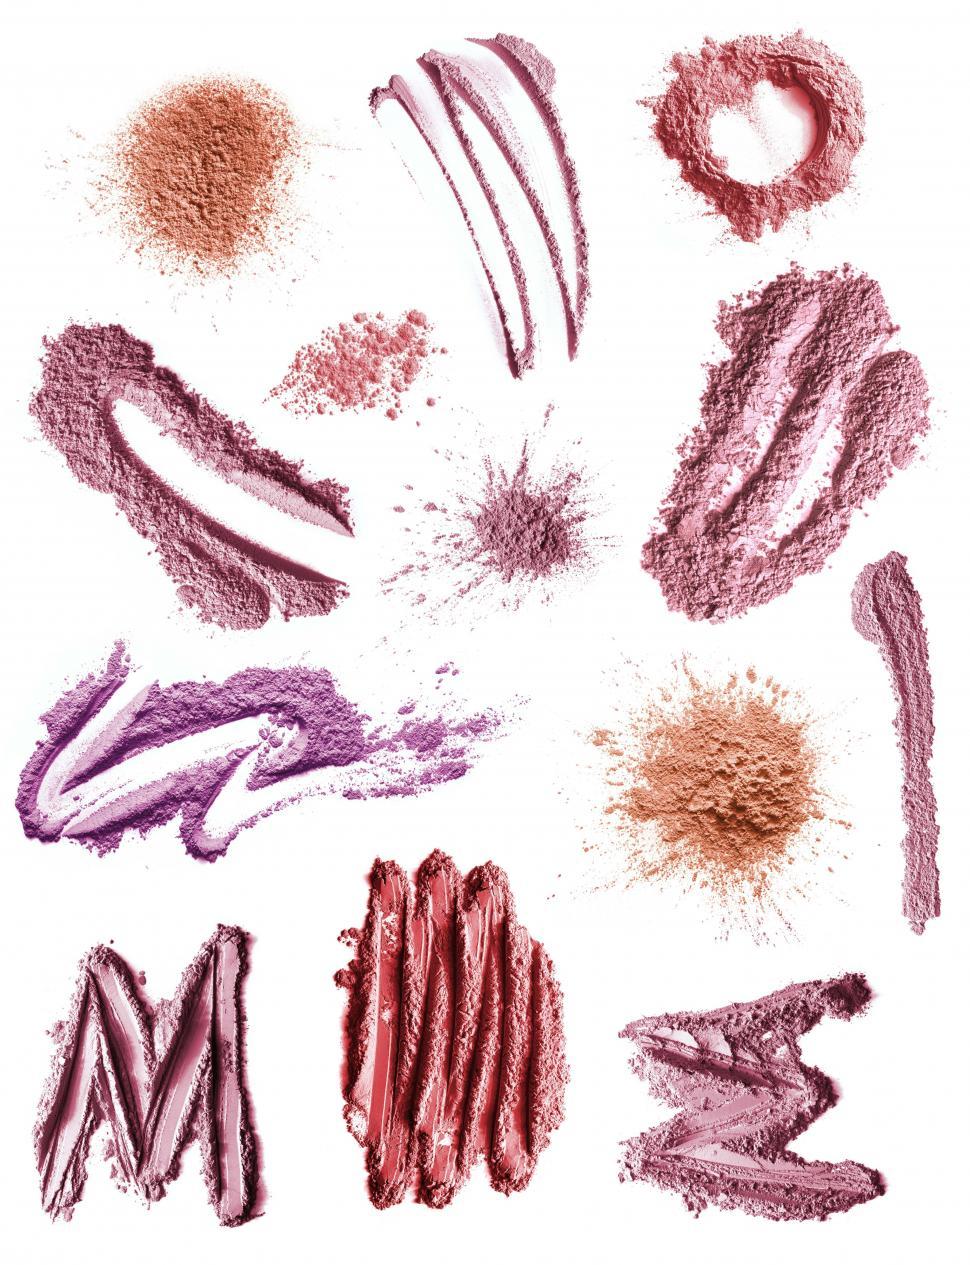 Free Image of various tints of spilled blush on white, separate blush 